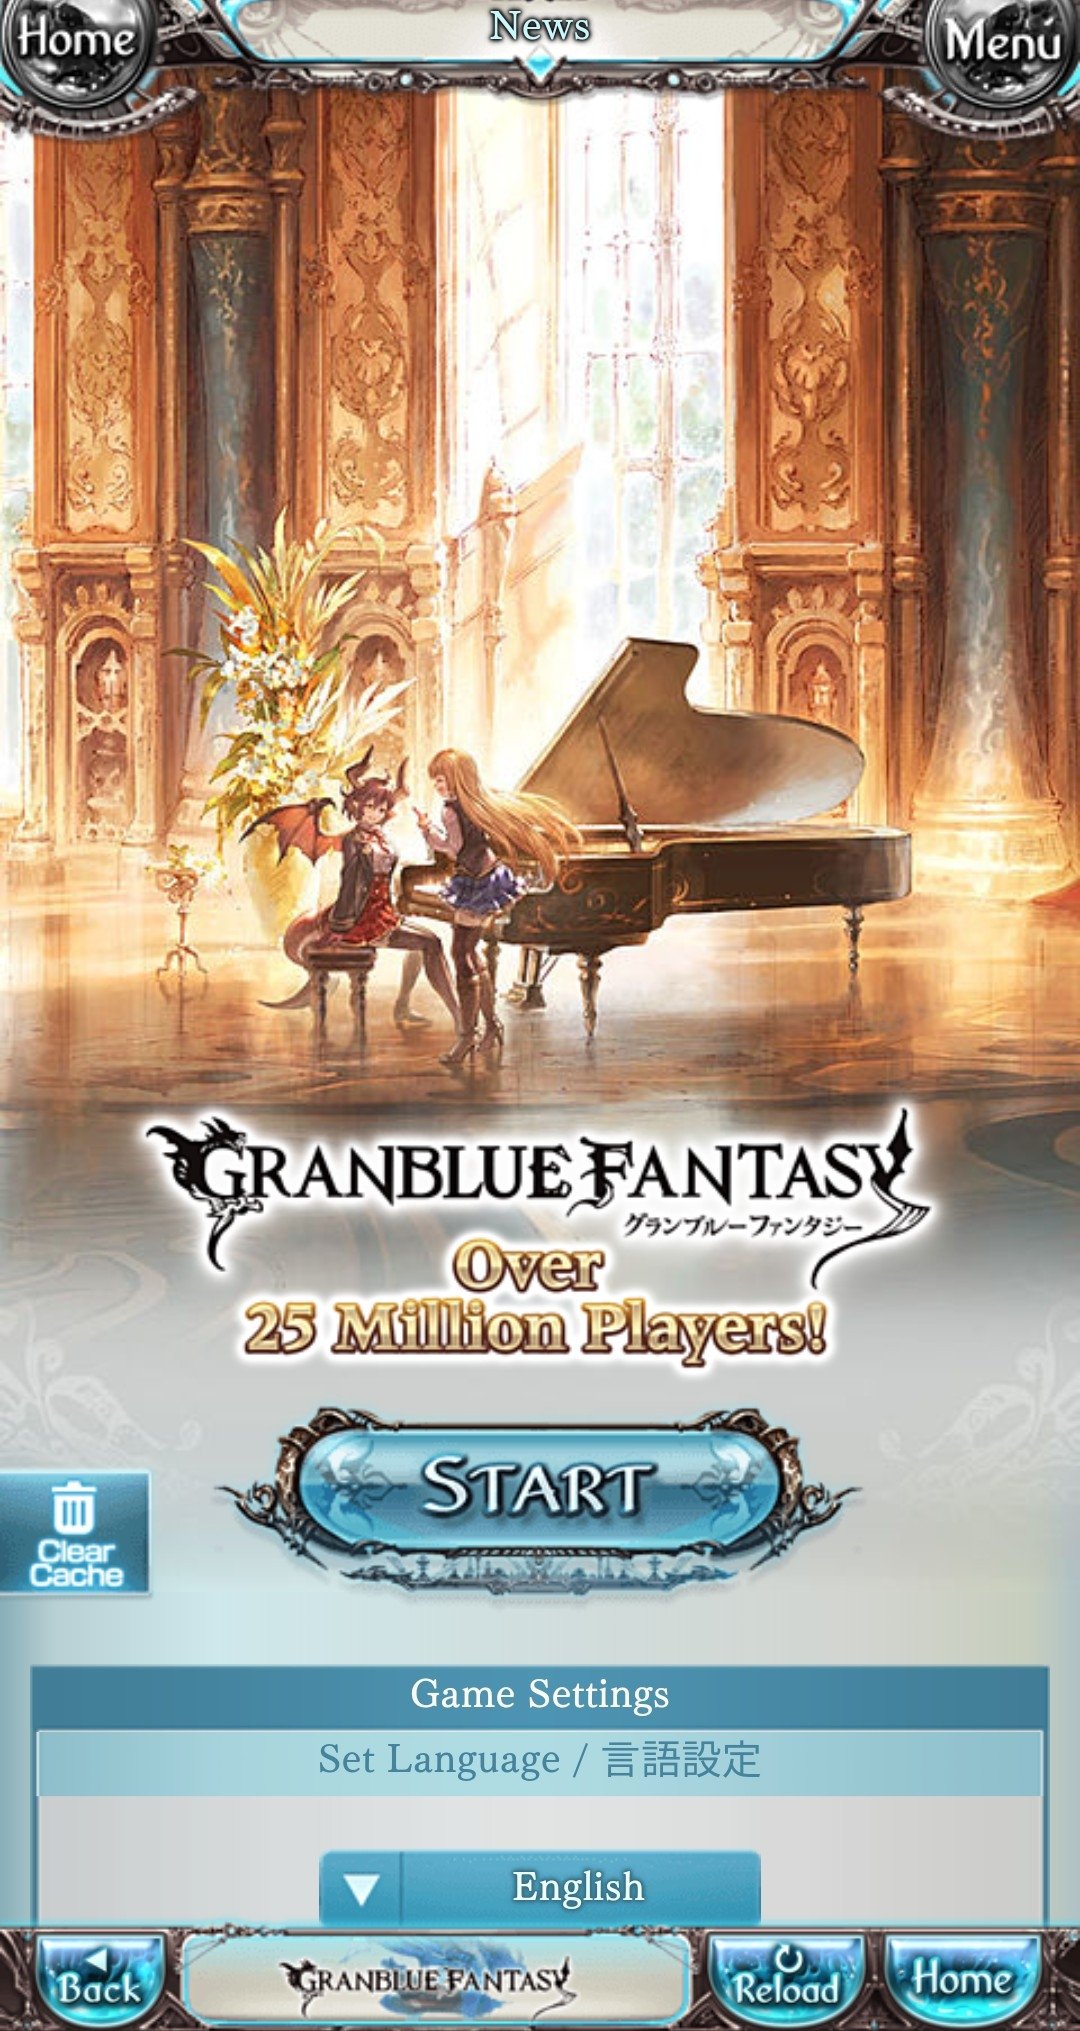 Download] Granblue Fantasy Apk [v 1.7.2] For Android